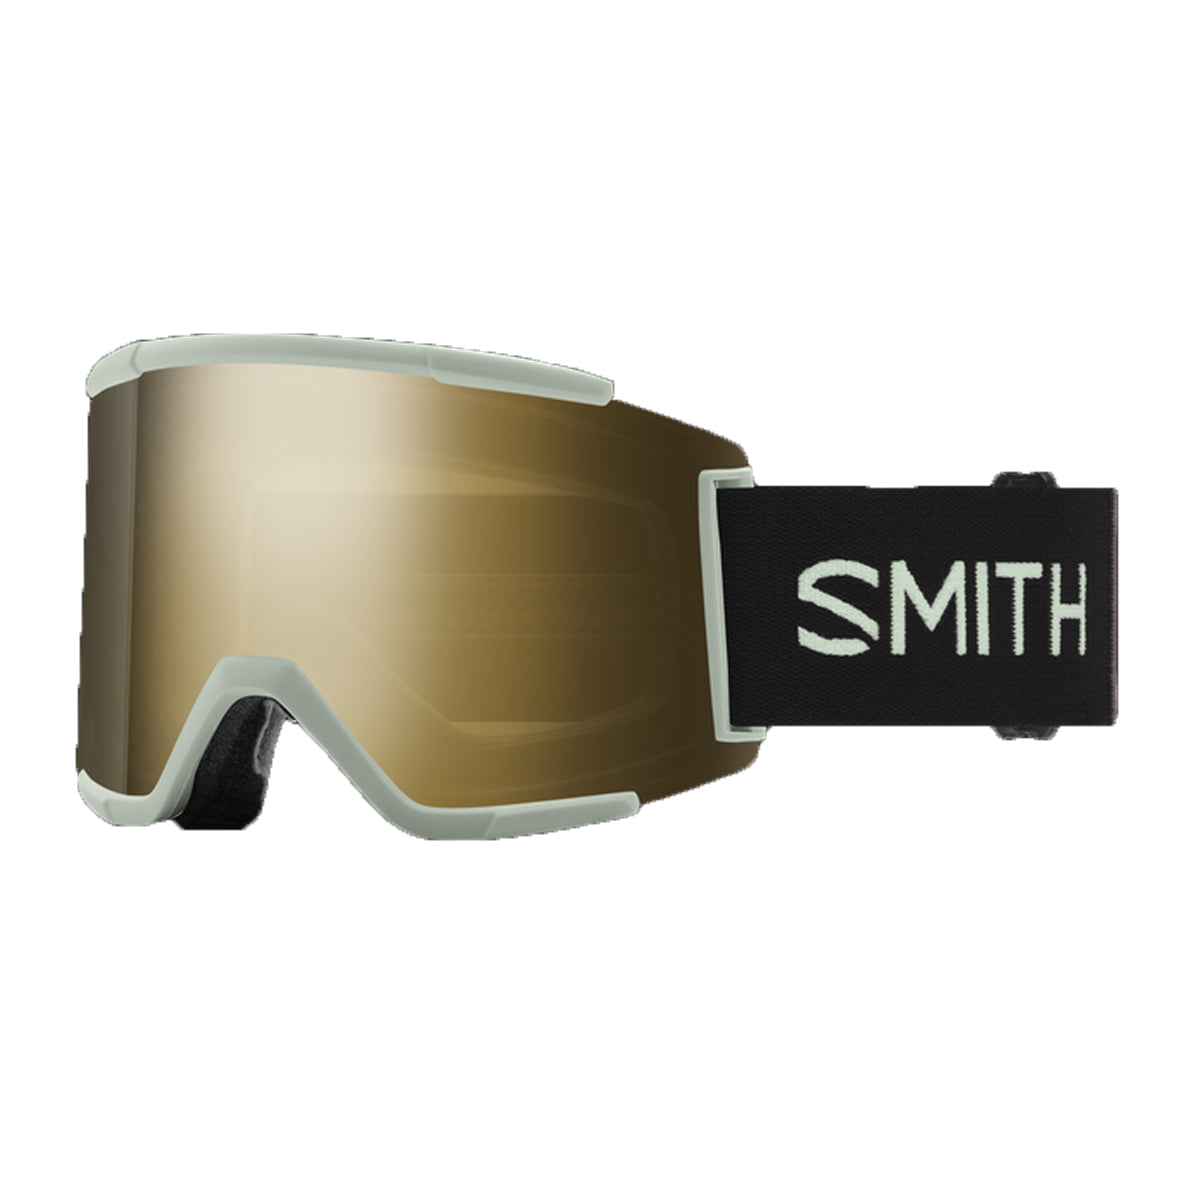 SMITH SQUAD XL SNOWBOARD GOGGLES - LOW BRIDGE FIT